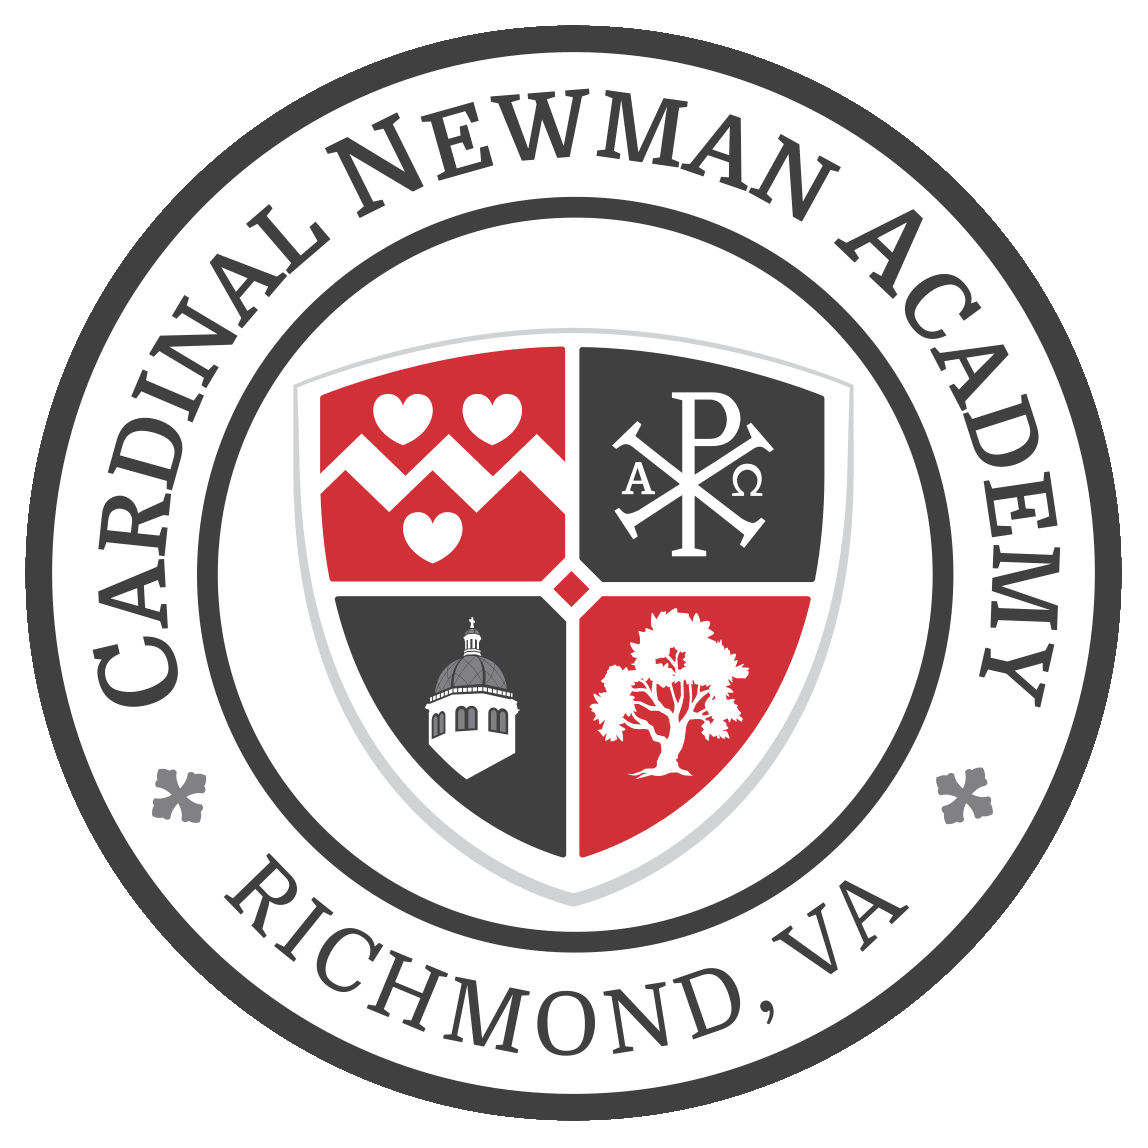 Cardinal Newman Academy